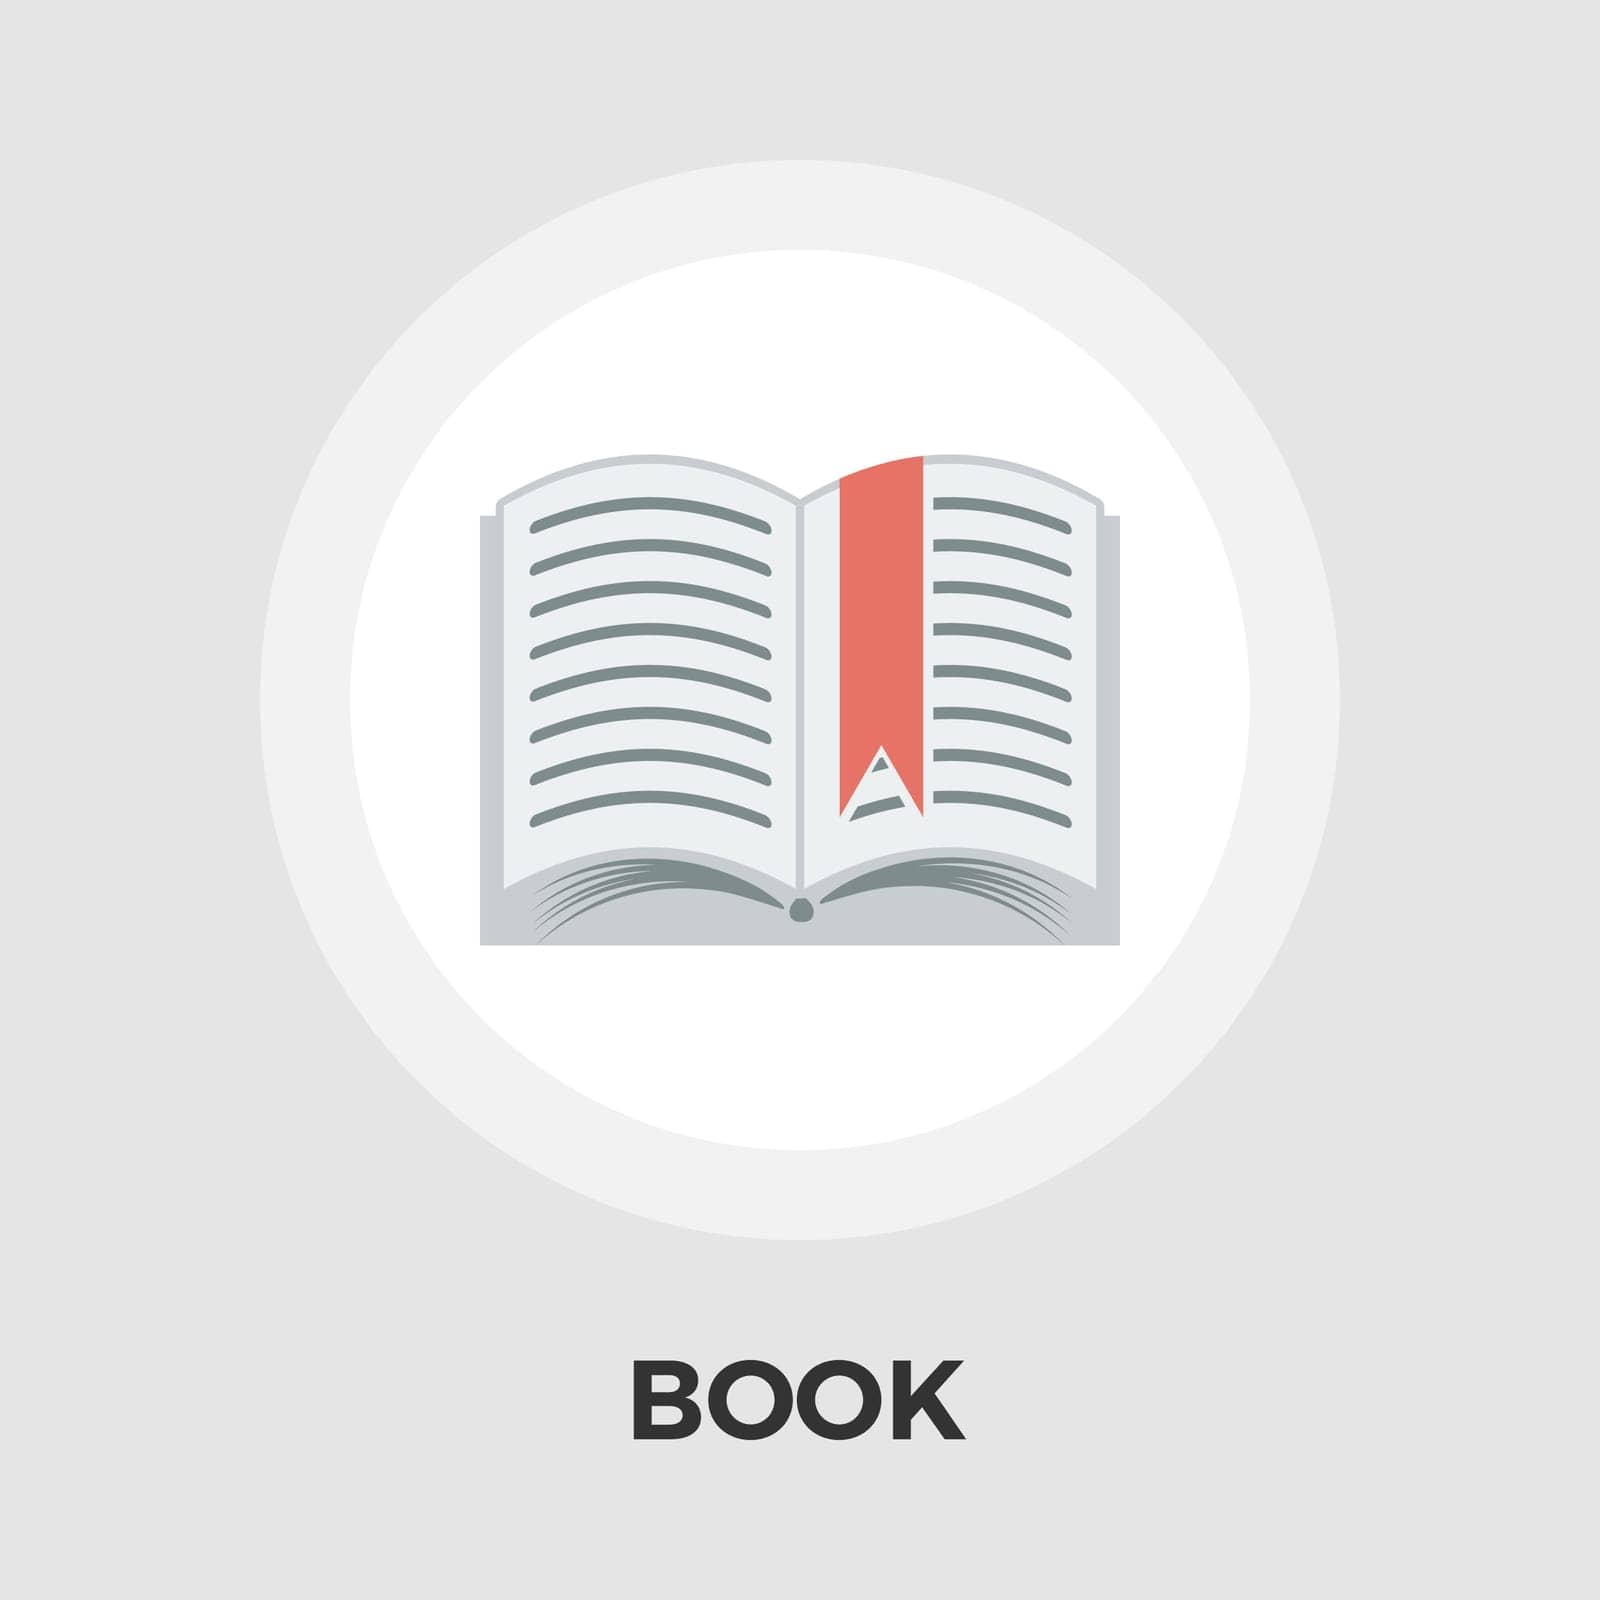 Book Flat Icon by smoki